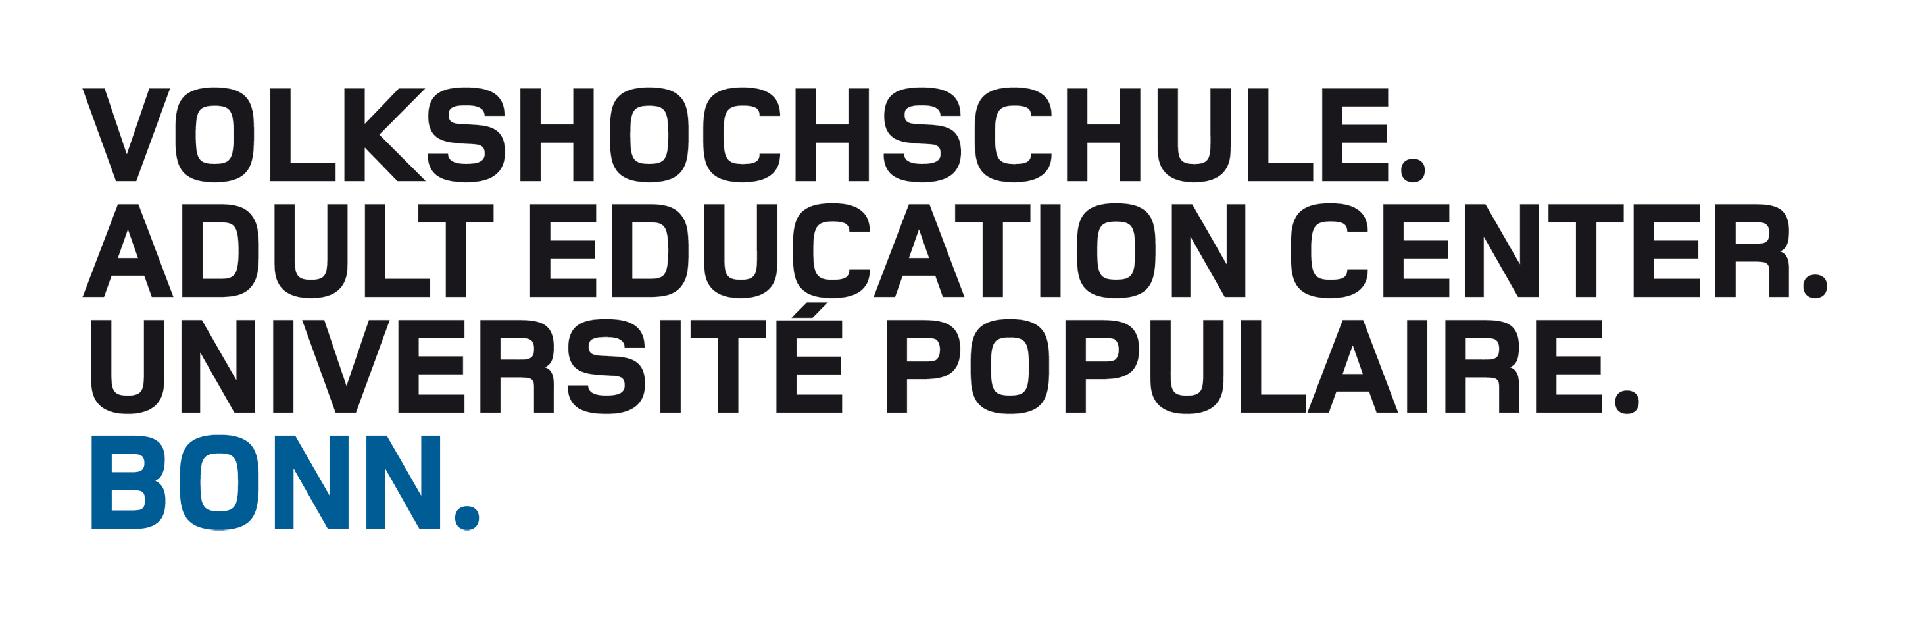 Volkshochschule VHS Bonn